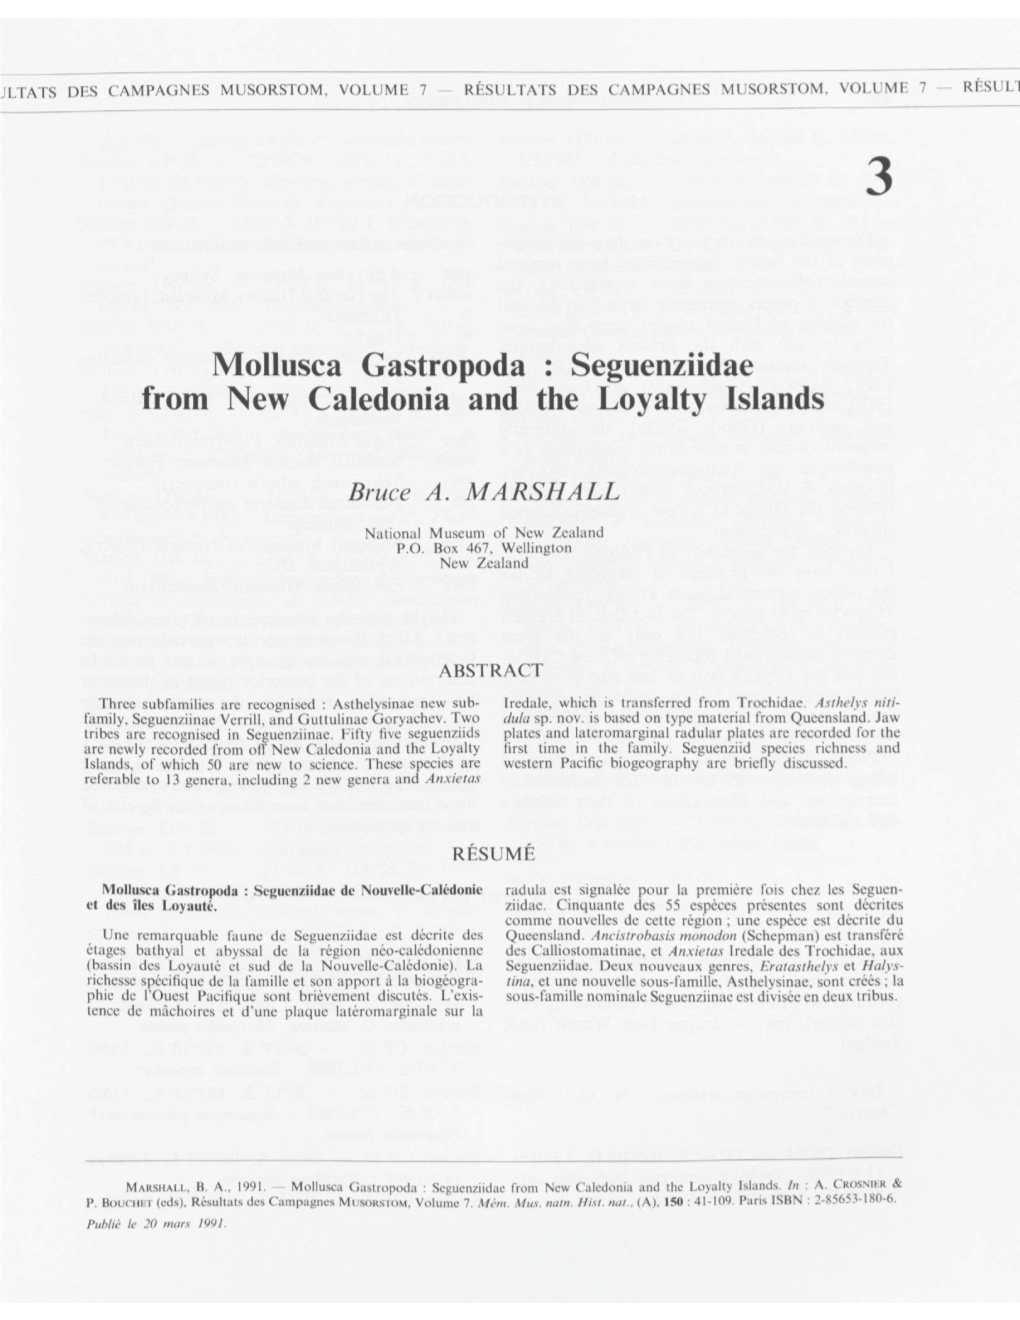 Mollusca Gastropoda : Seguenziidae from New Caledonia and the Loyalty Islands